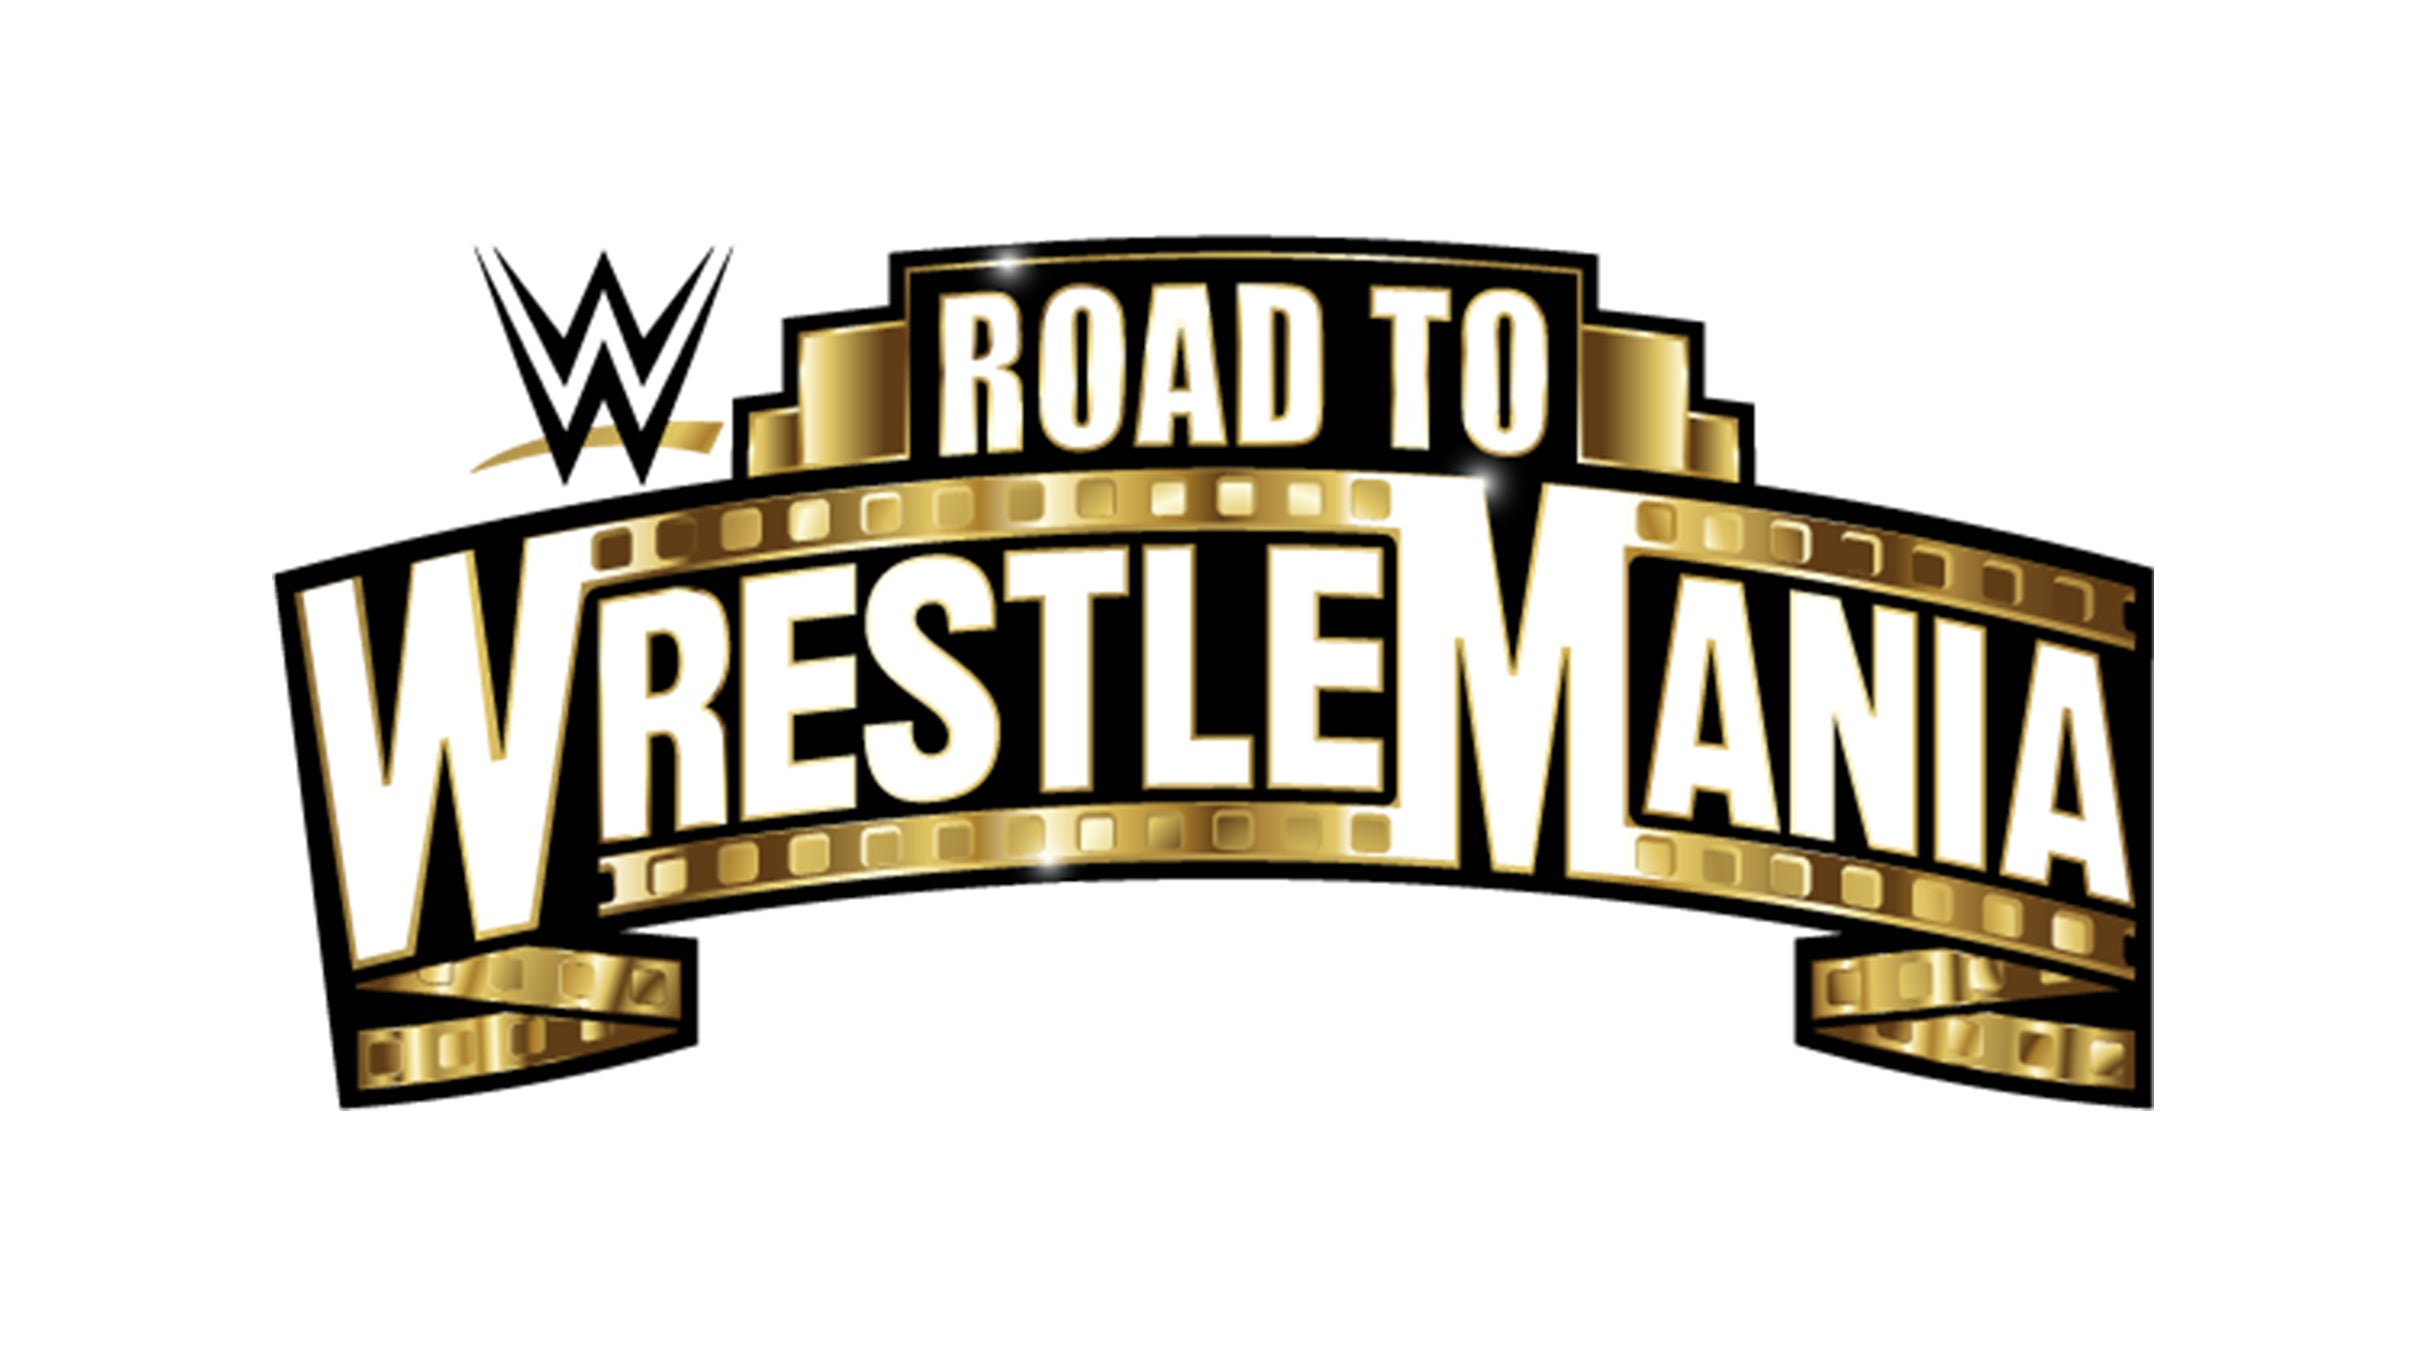 WWE Road to WrestleMania pre-sale password for wrestling show tickets in Fargo, ND (Fargodome)